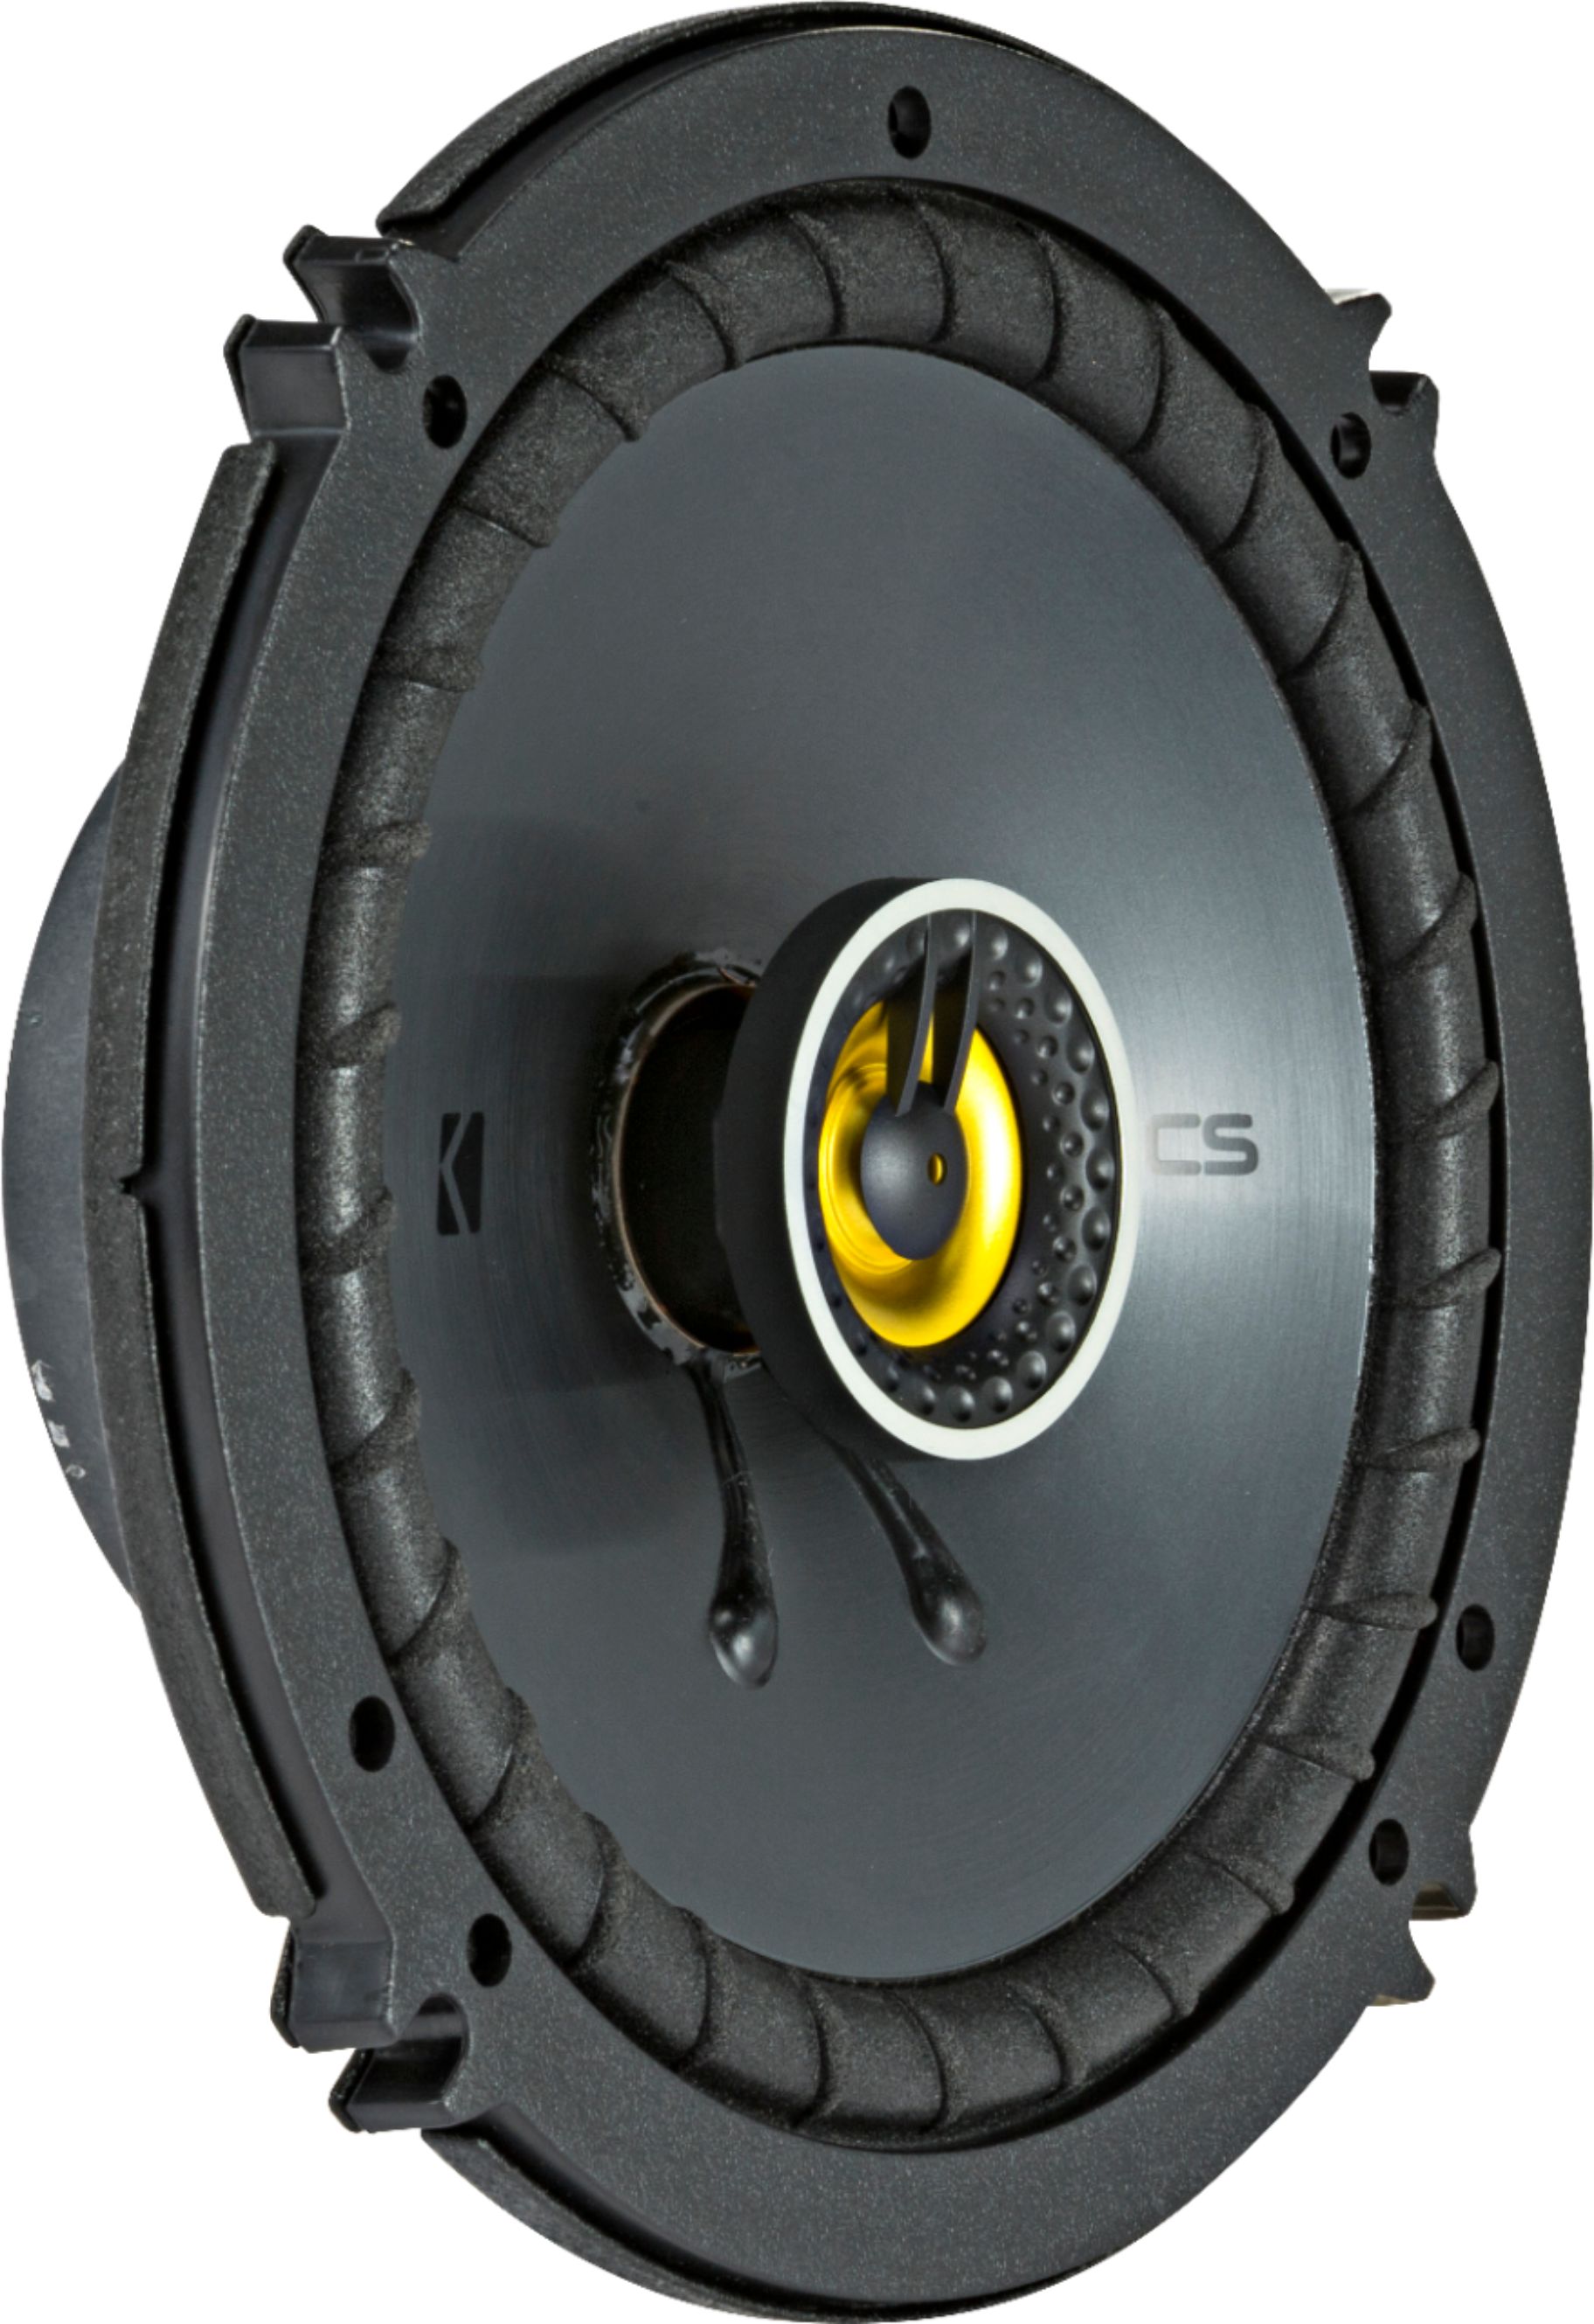 Angle View: KICKER - CS Series 6-1/2" 2-Way Car Speakers with Polypropylene Cones (Pair) - Black